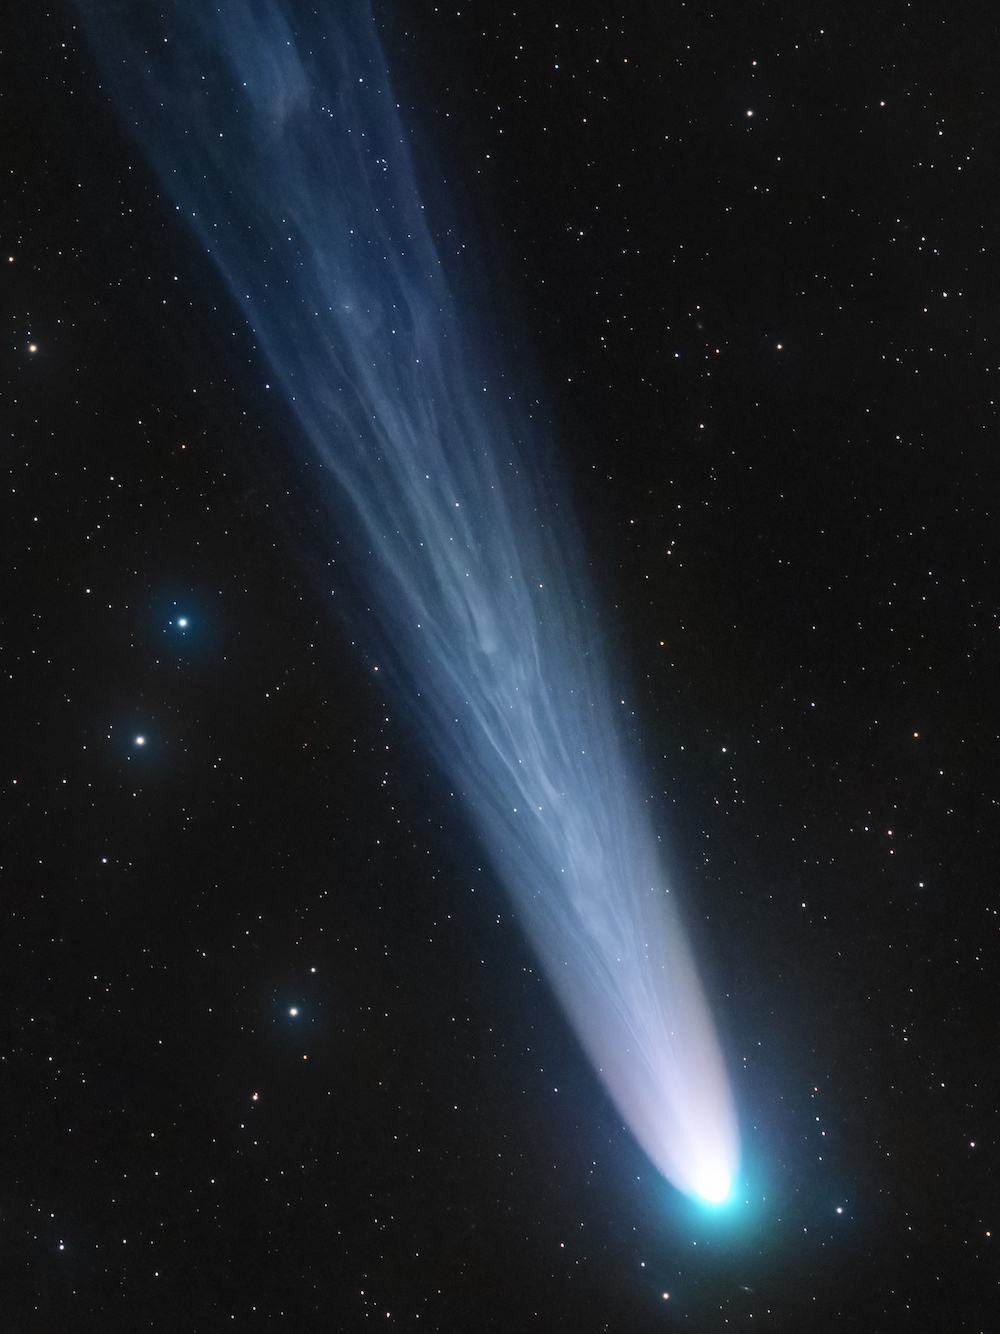 Comet C2021 A1 (Leonard) by Lionel Majzik